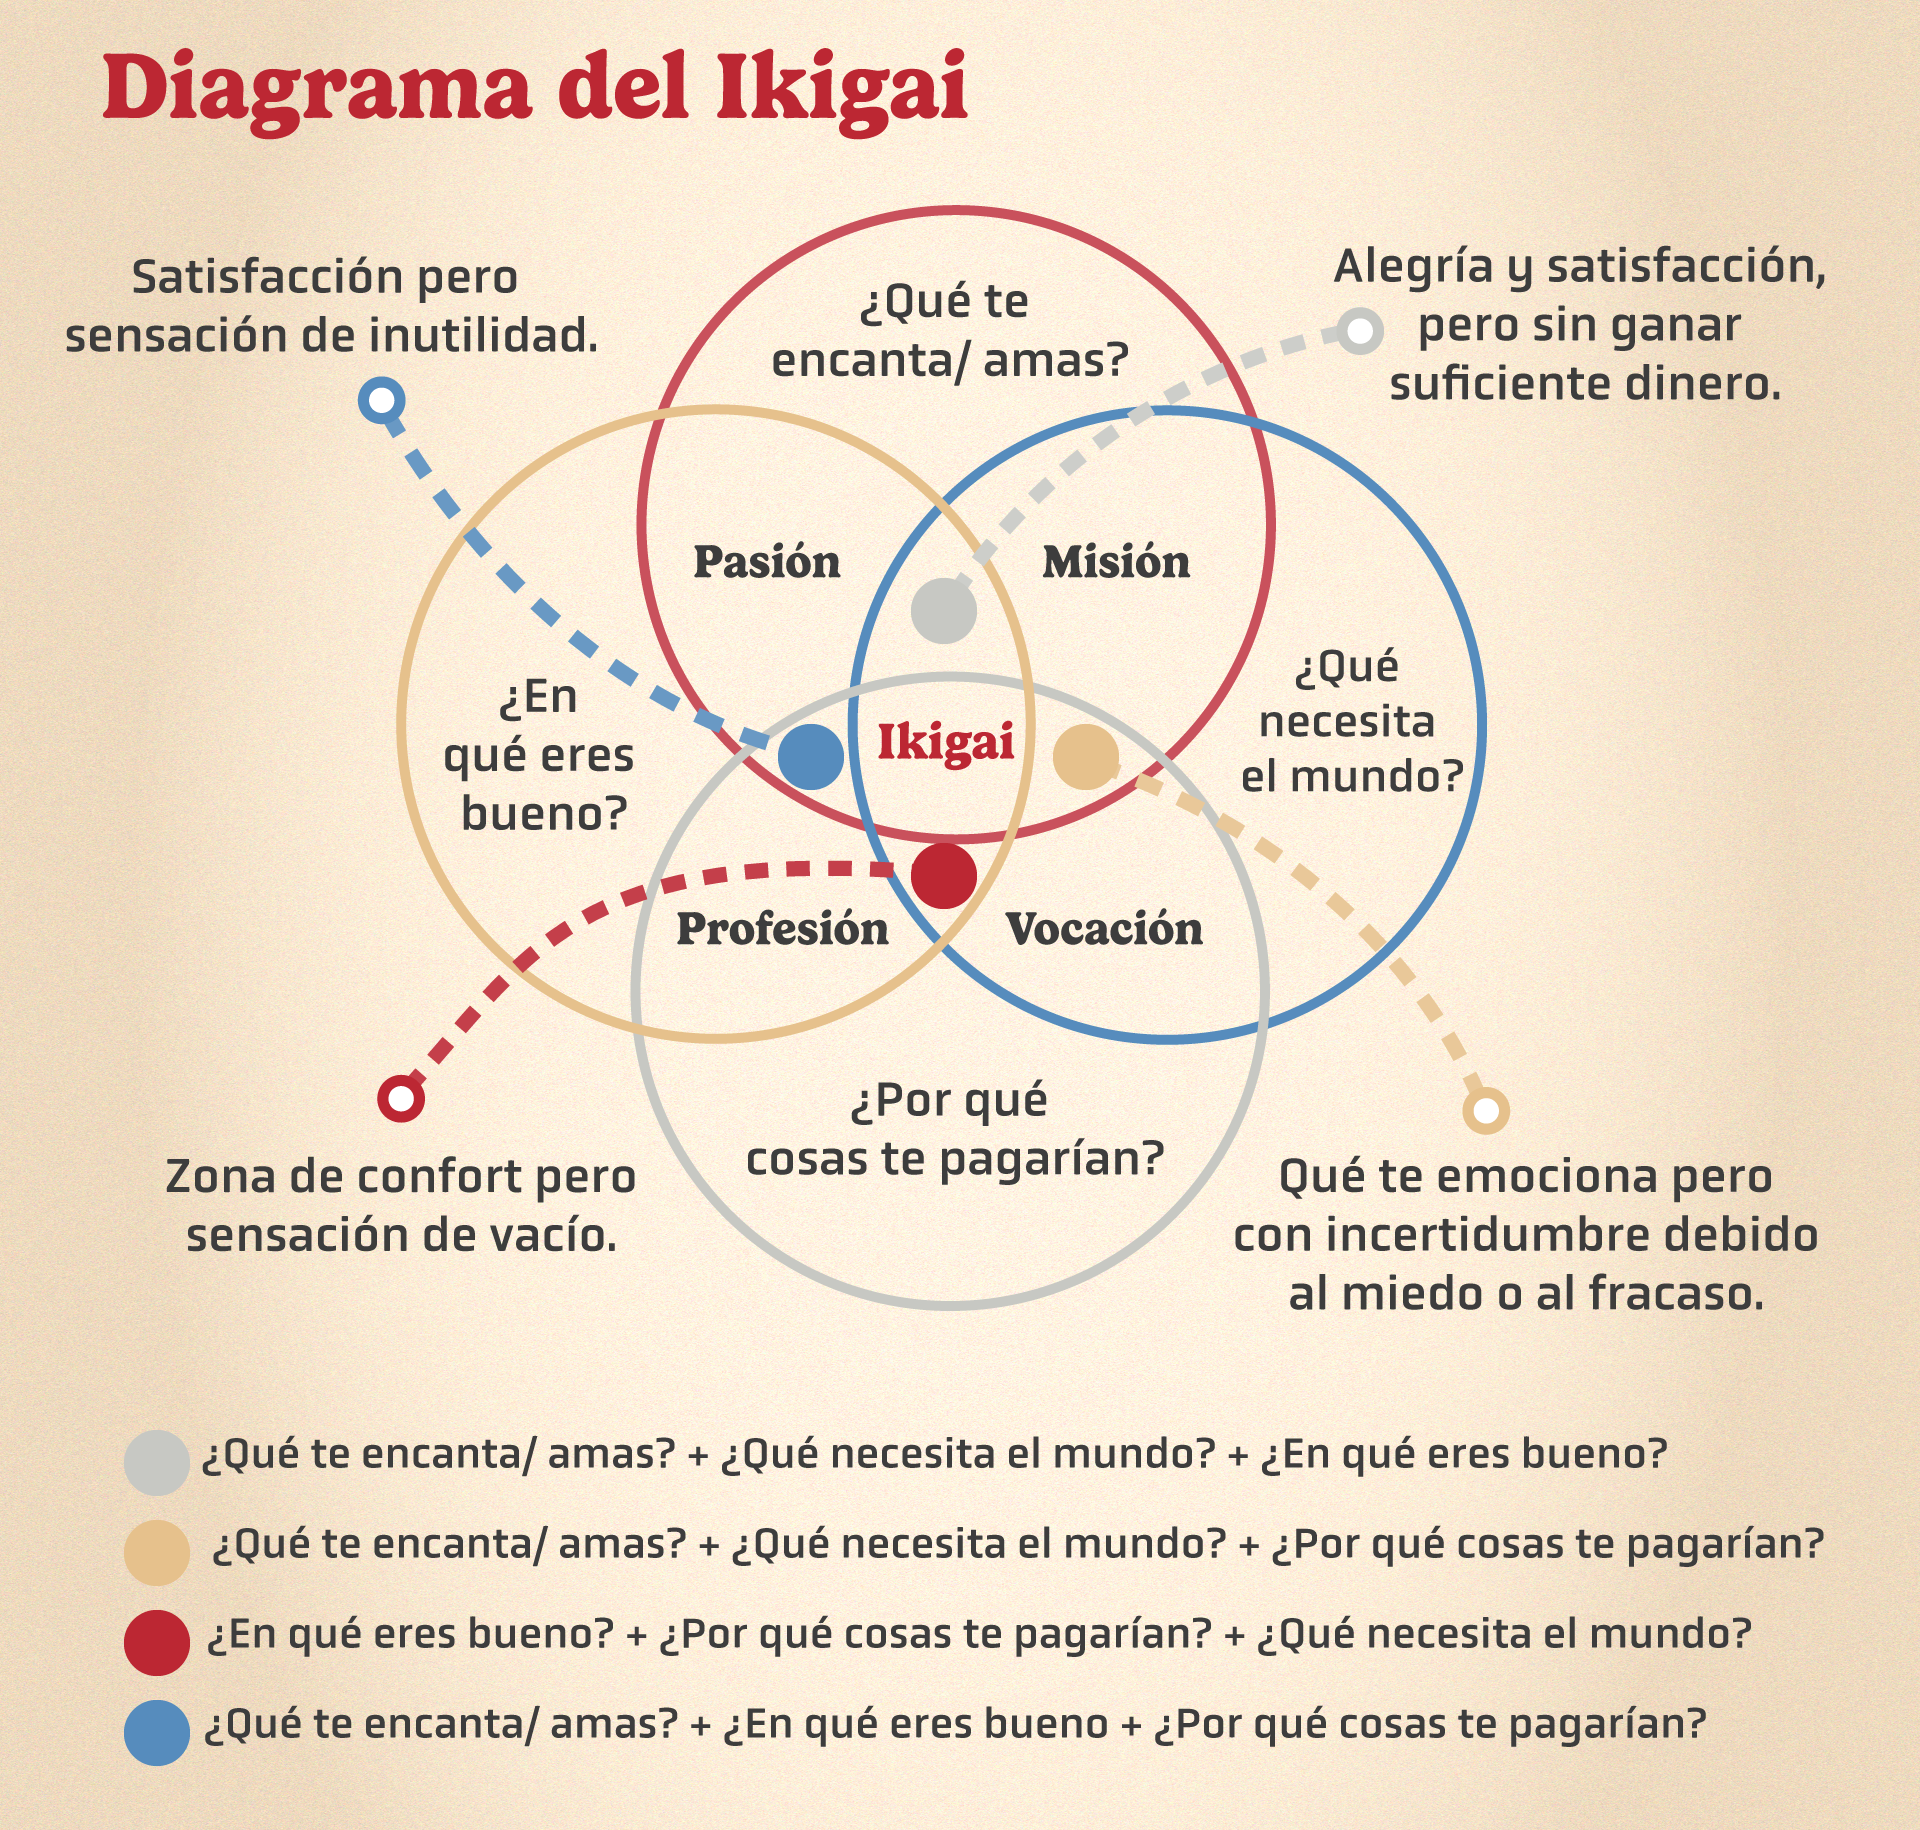 Diagrama de Venn del Ikigai - GCFGlobal